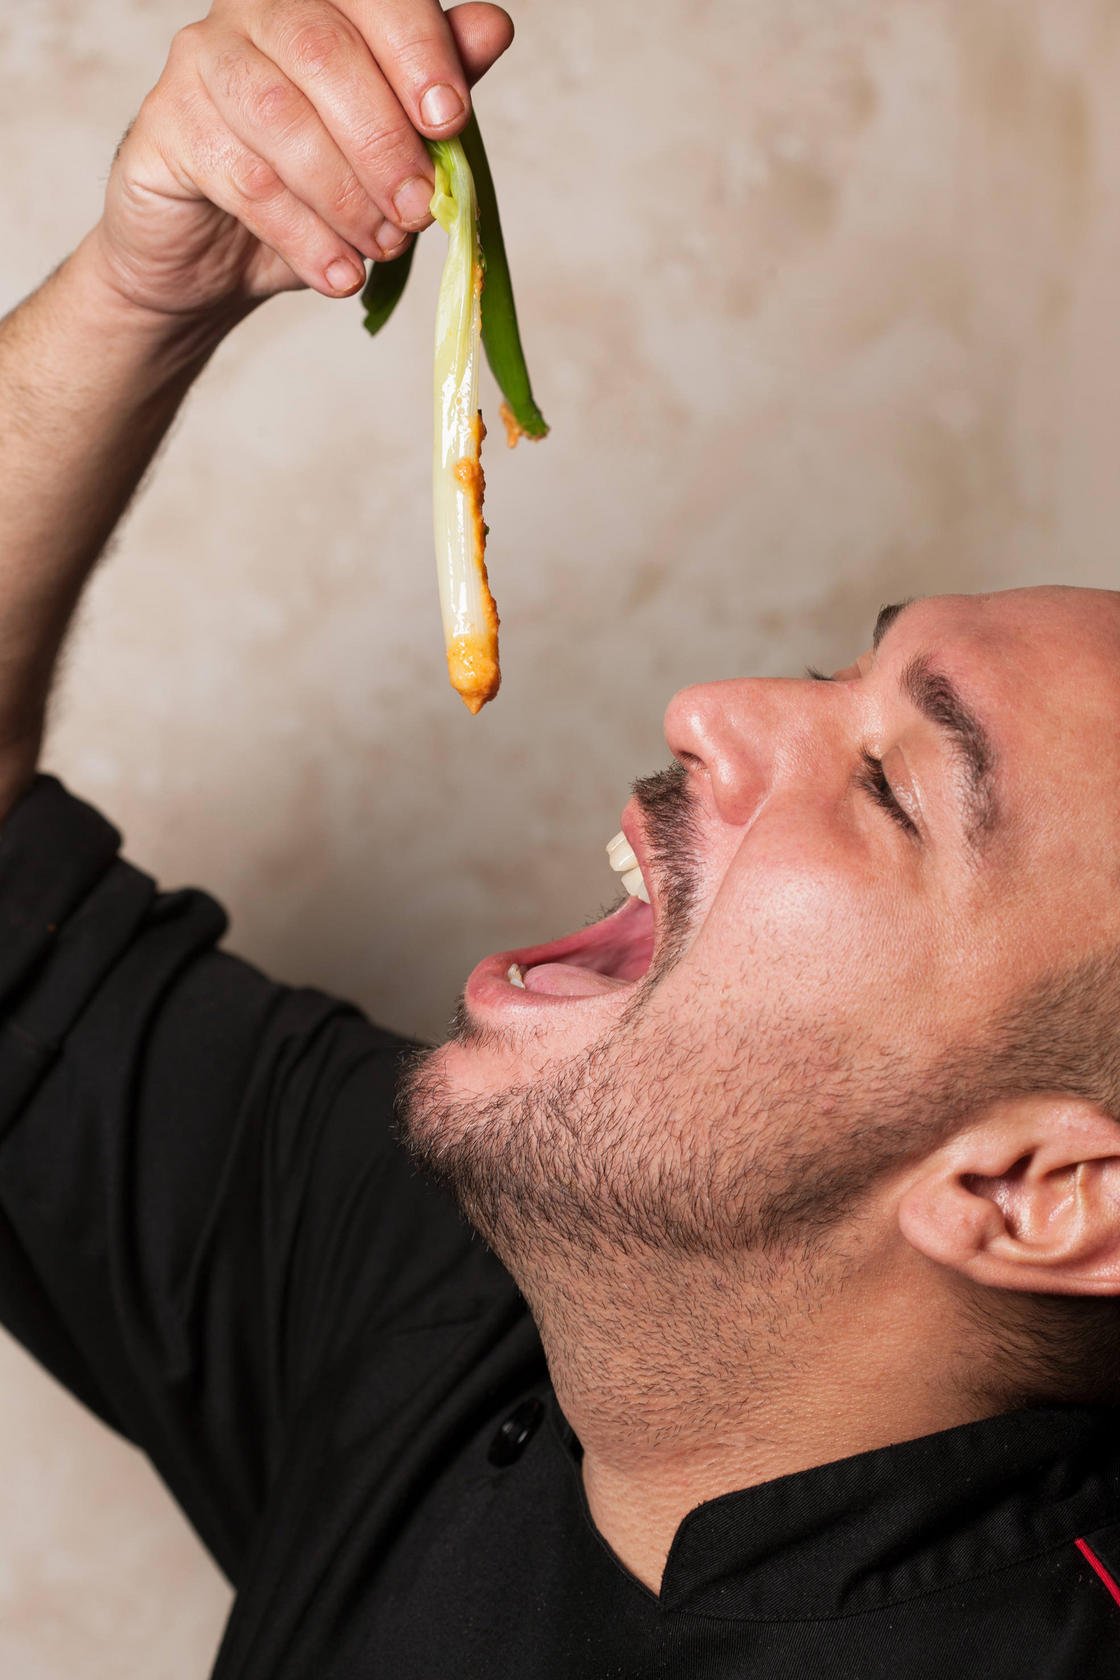 Chef Juanjo Carrillo demonstrates the Catalan way of eating calçots.